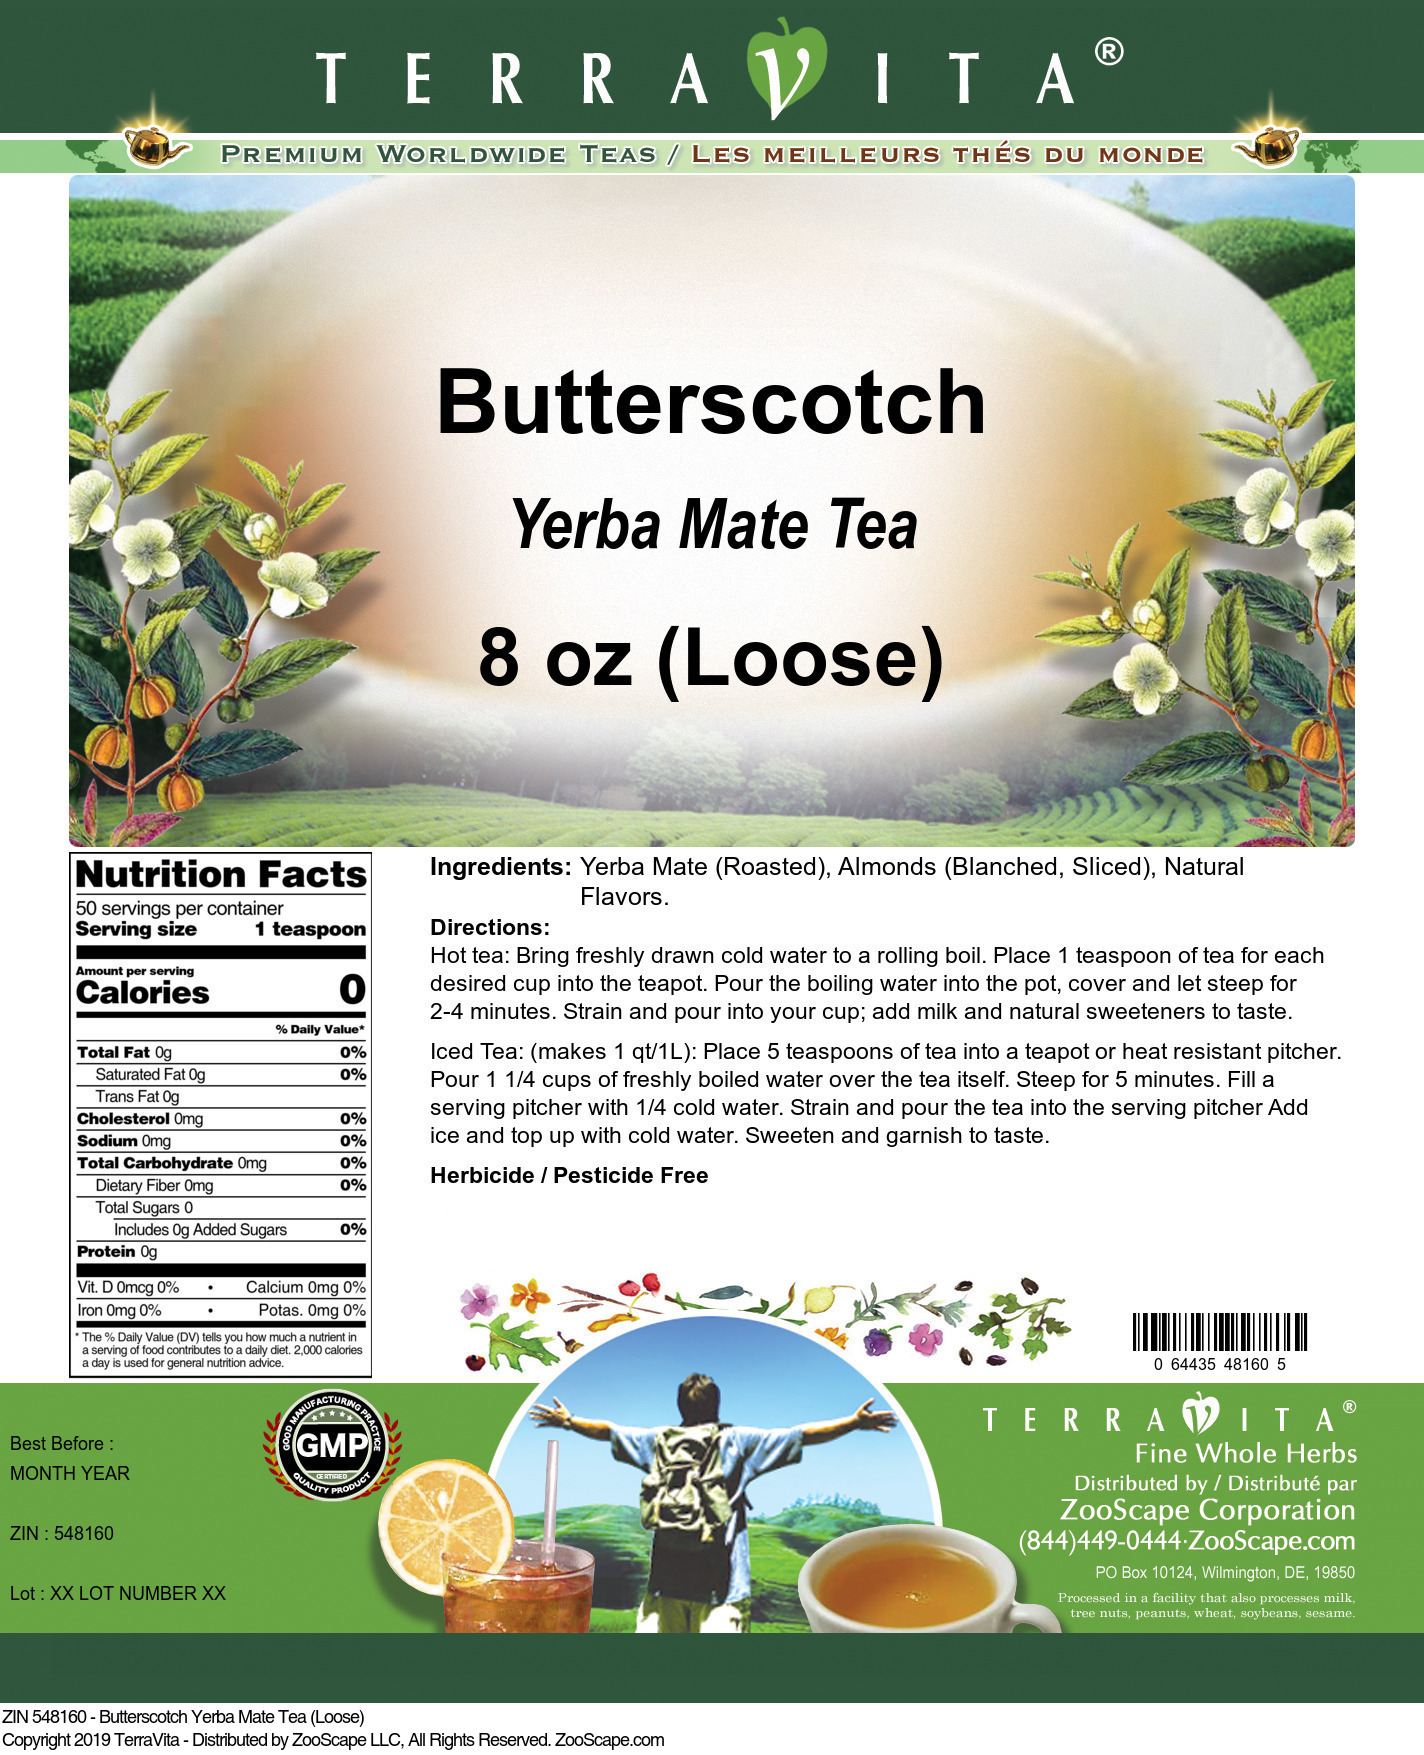 Butterscotch Yerba Mate Tea (Loose) - Label